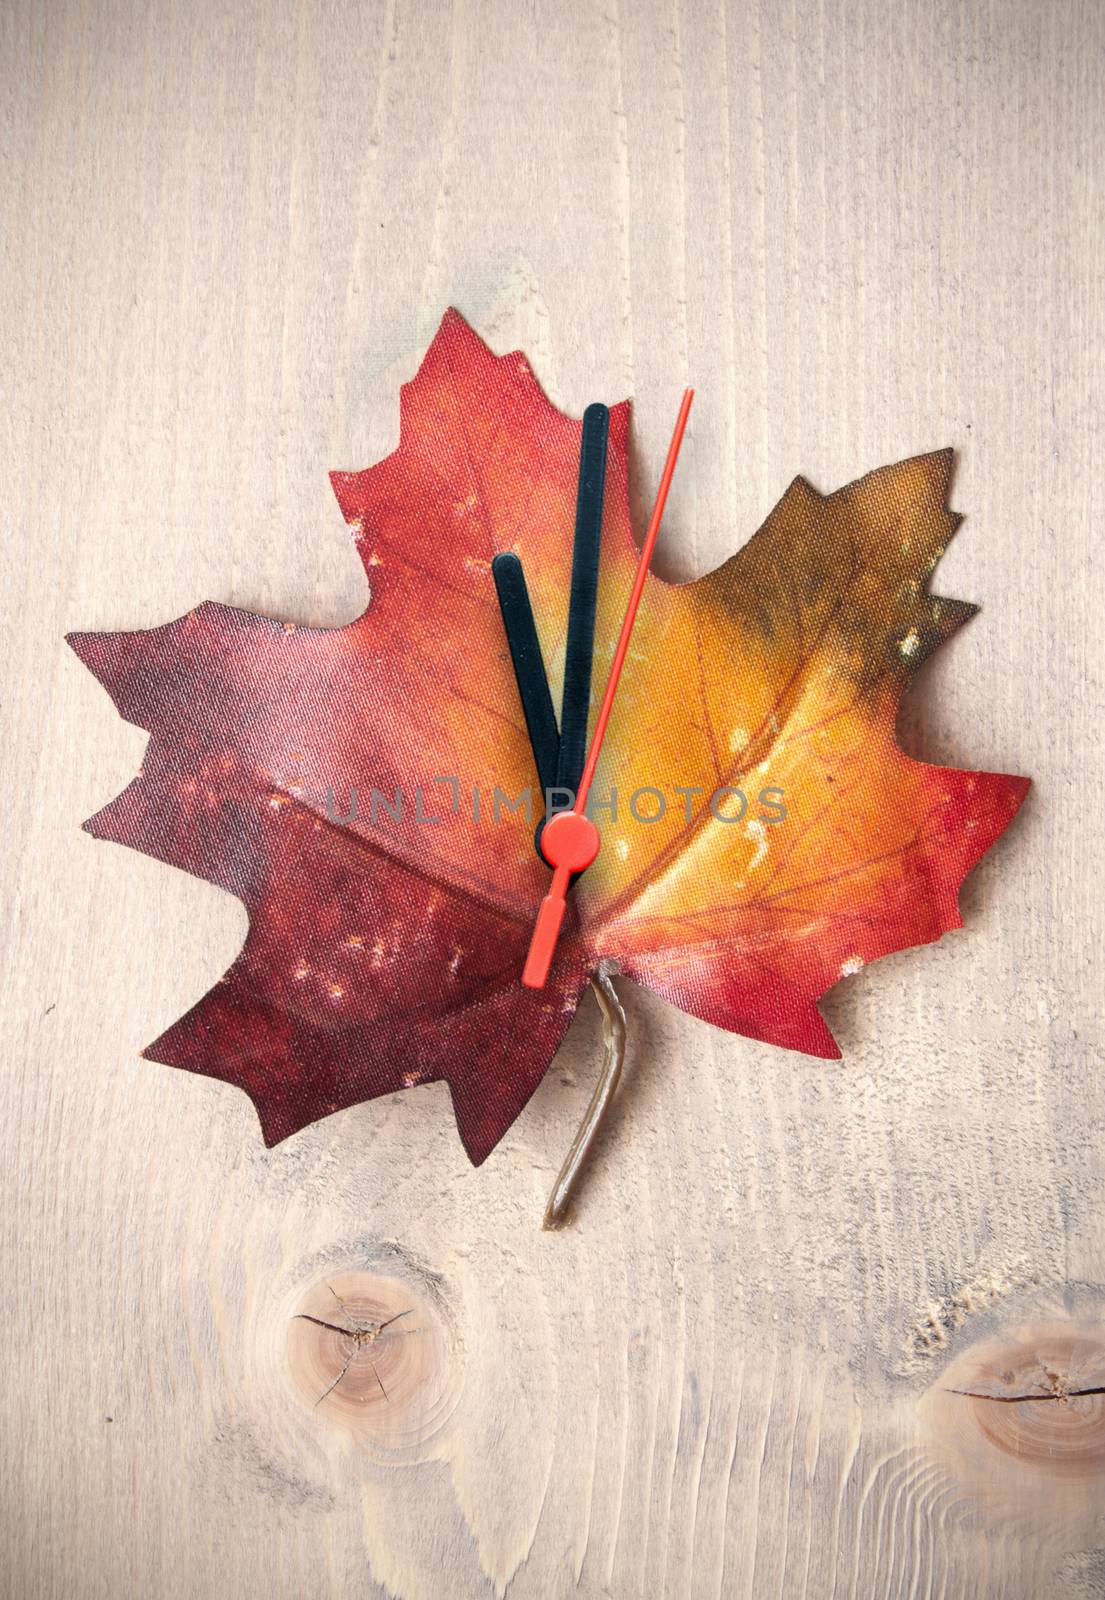 Autumn clock by unikpix